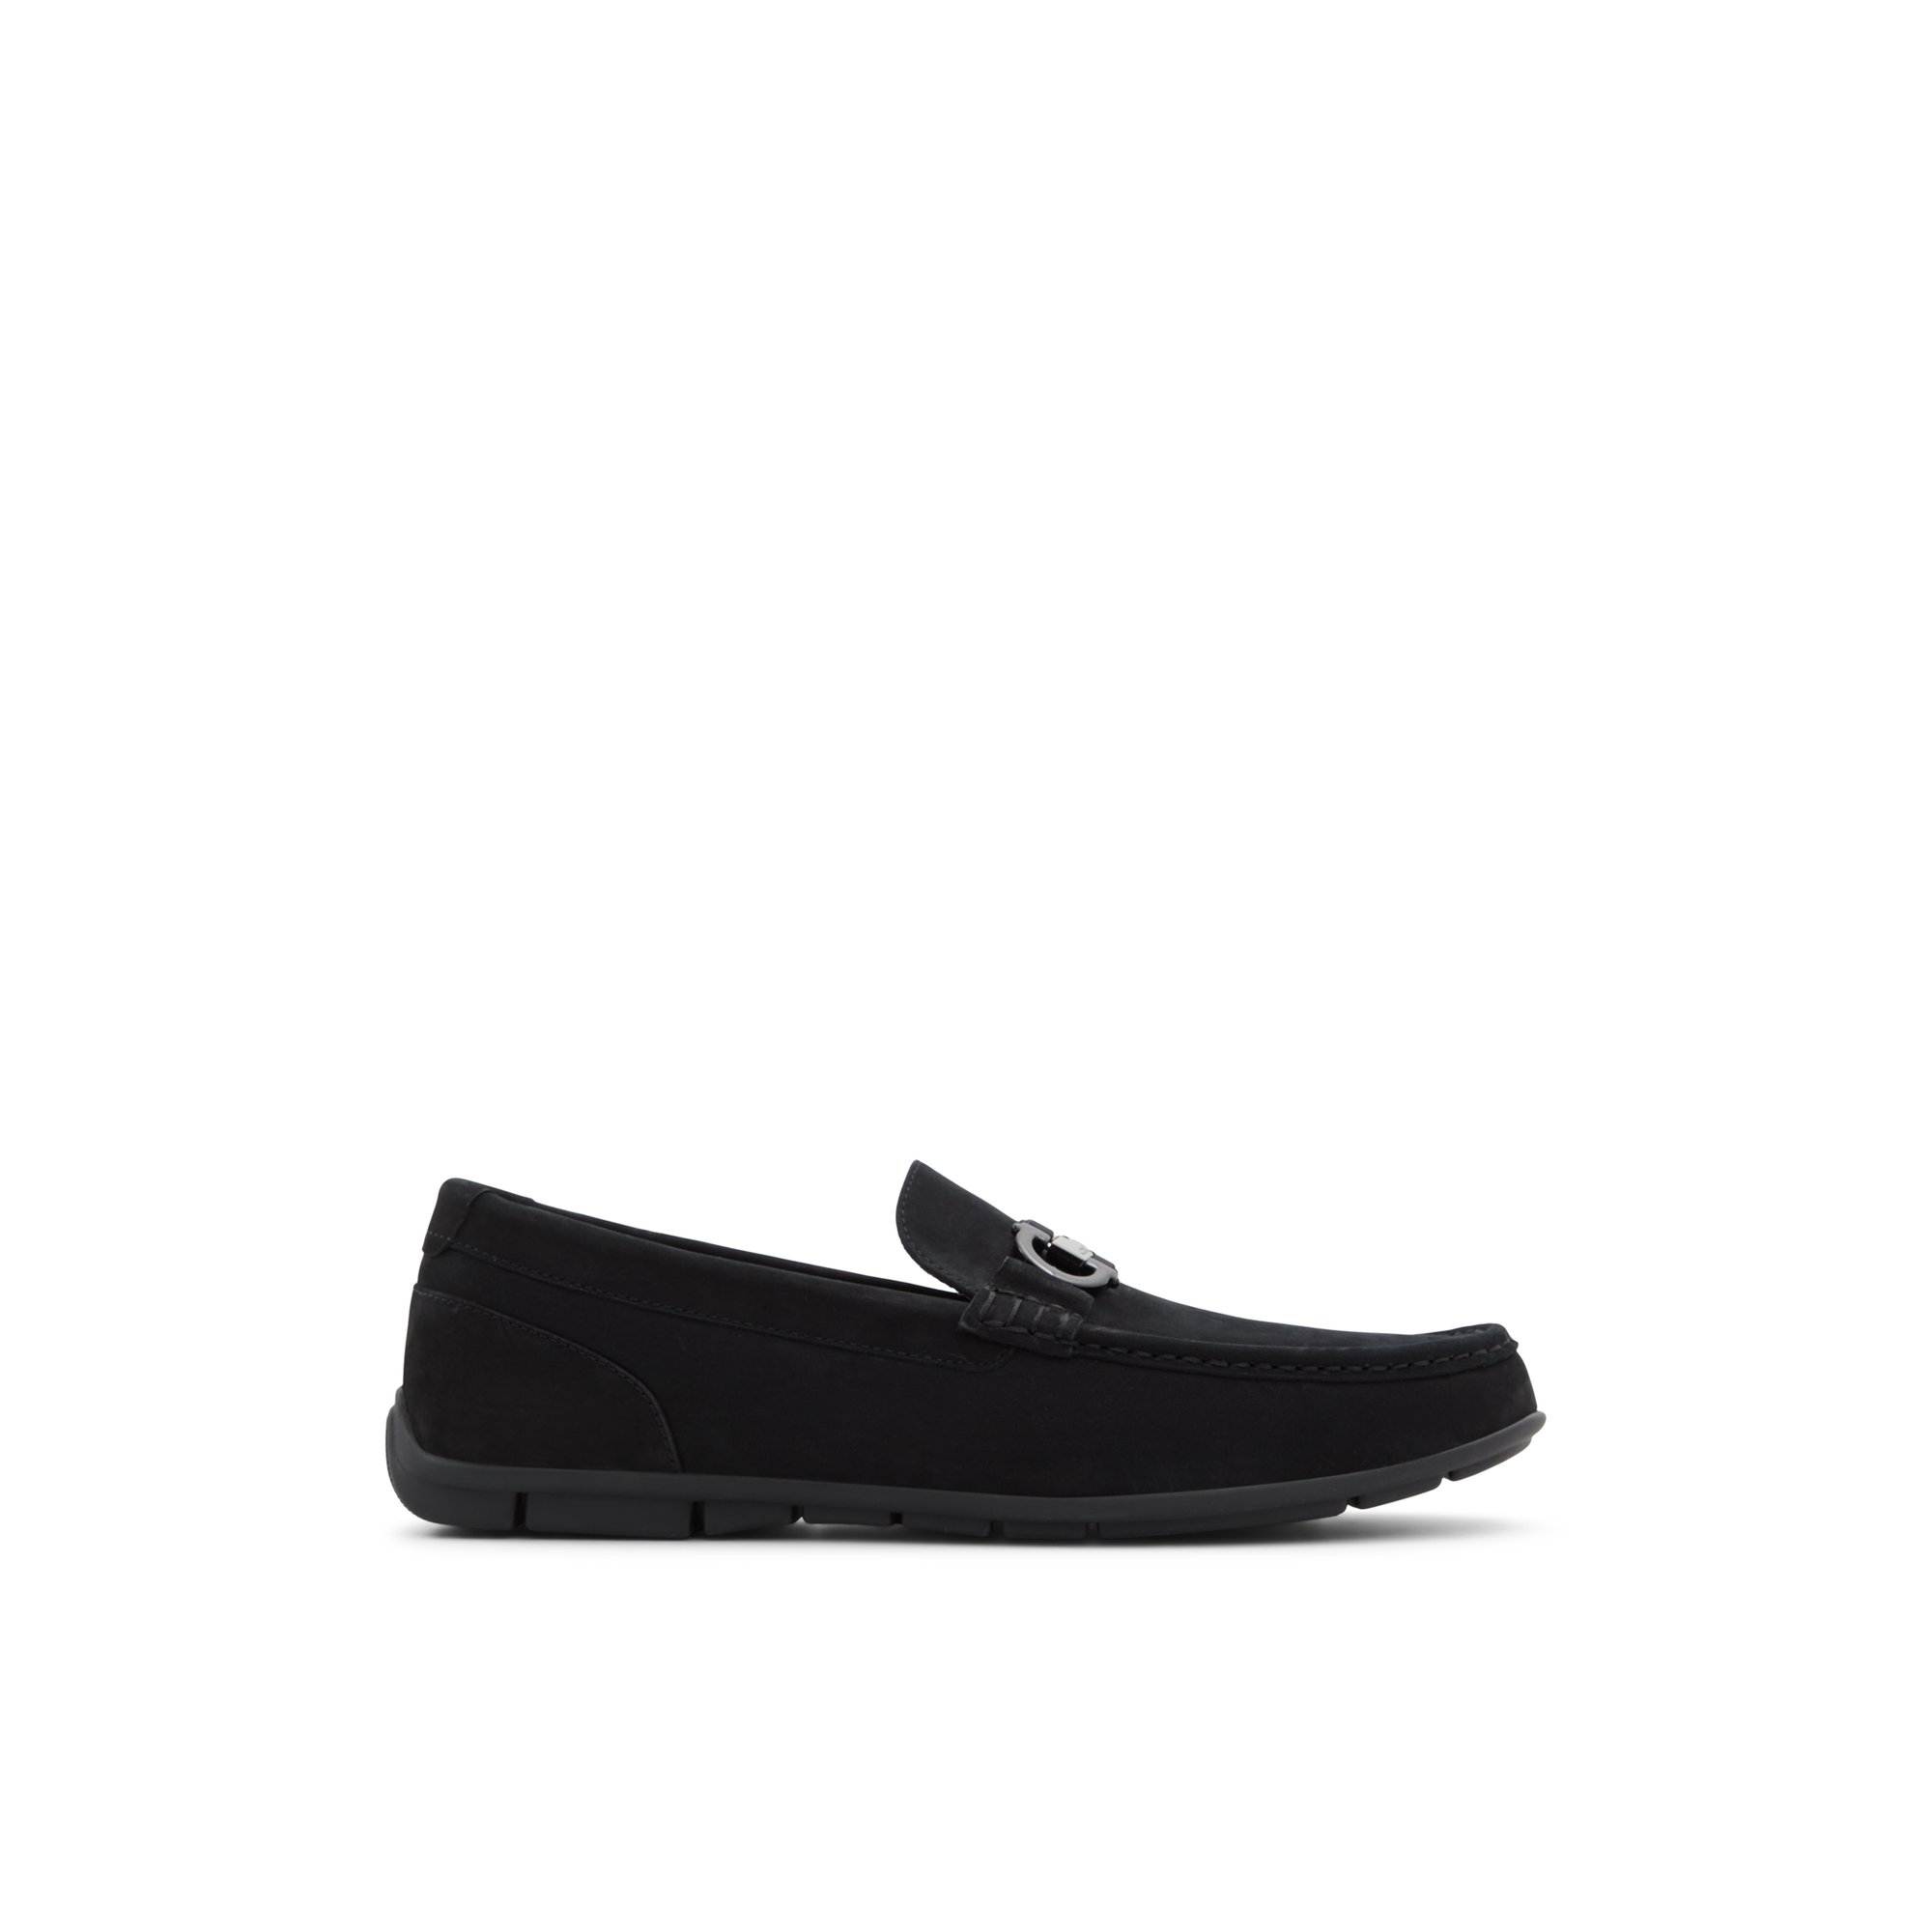 ALDO Orlovoflex - Men's Casual Shoes - Black